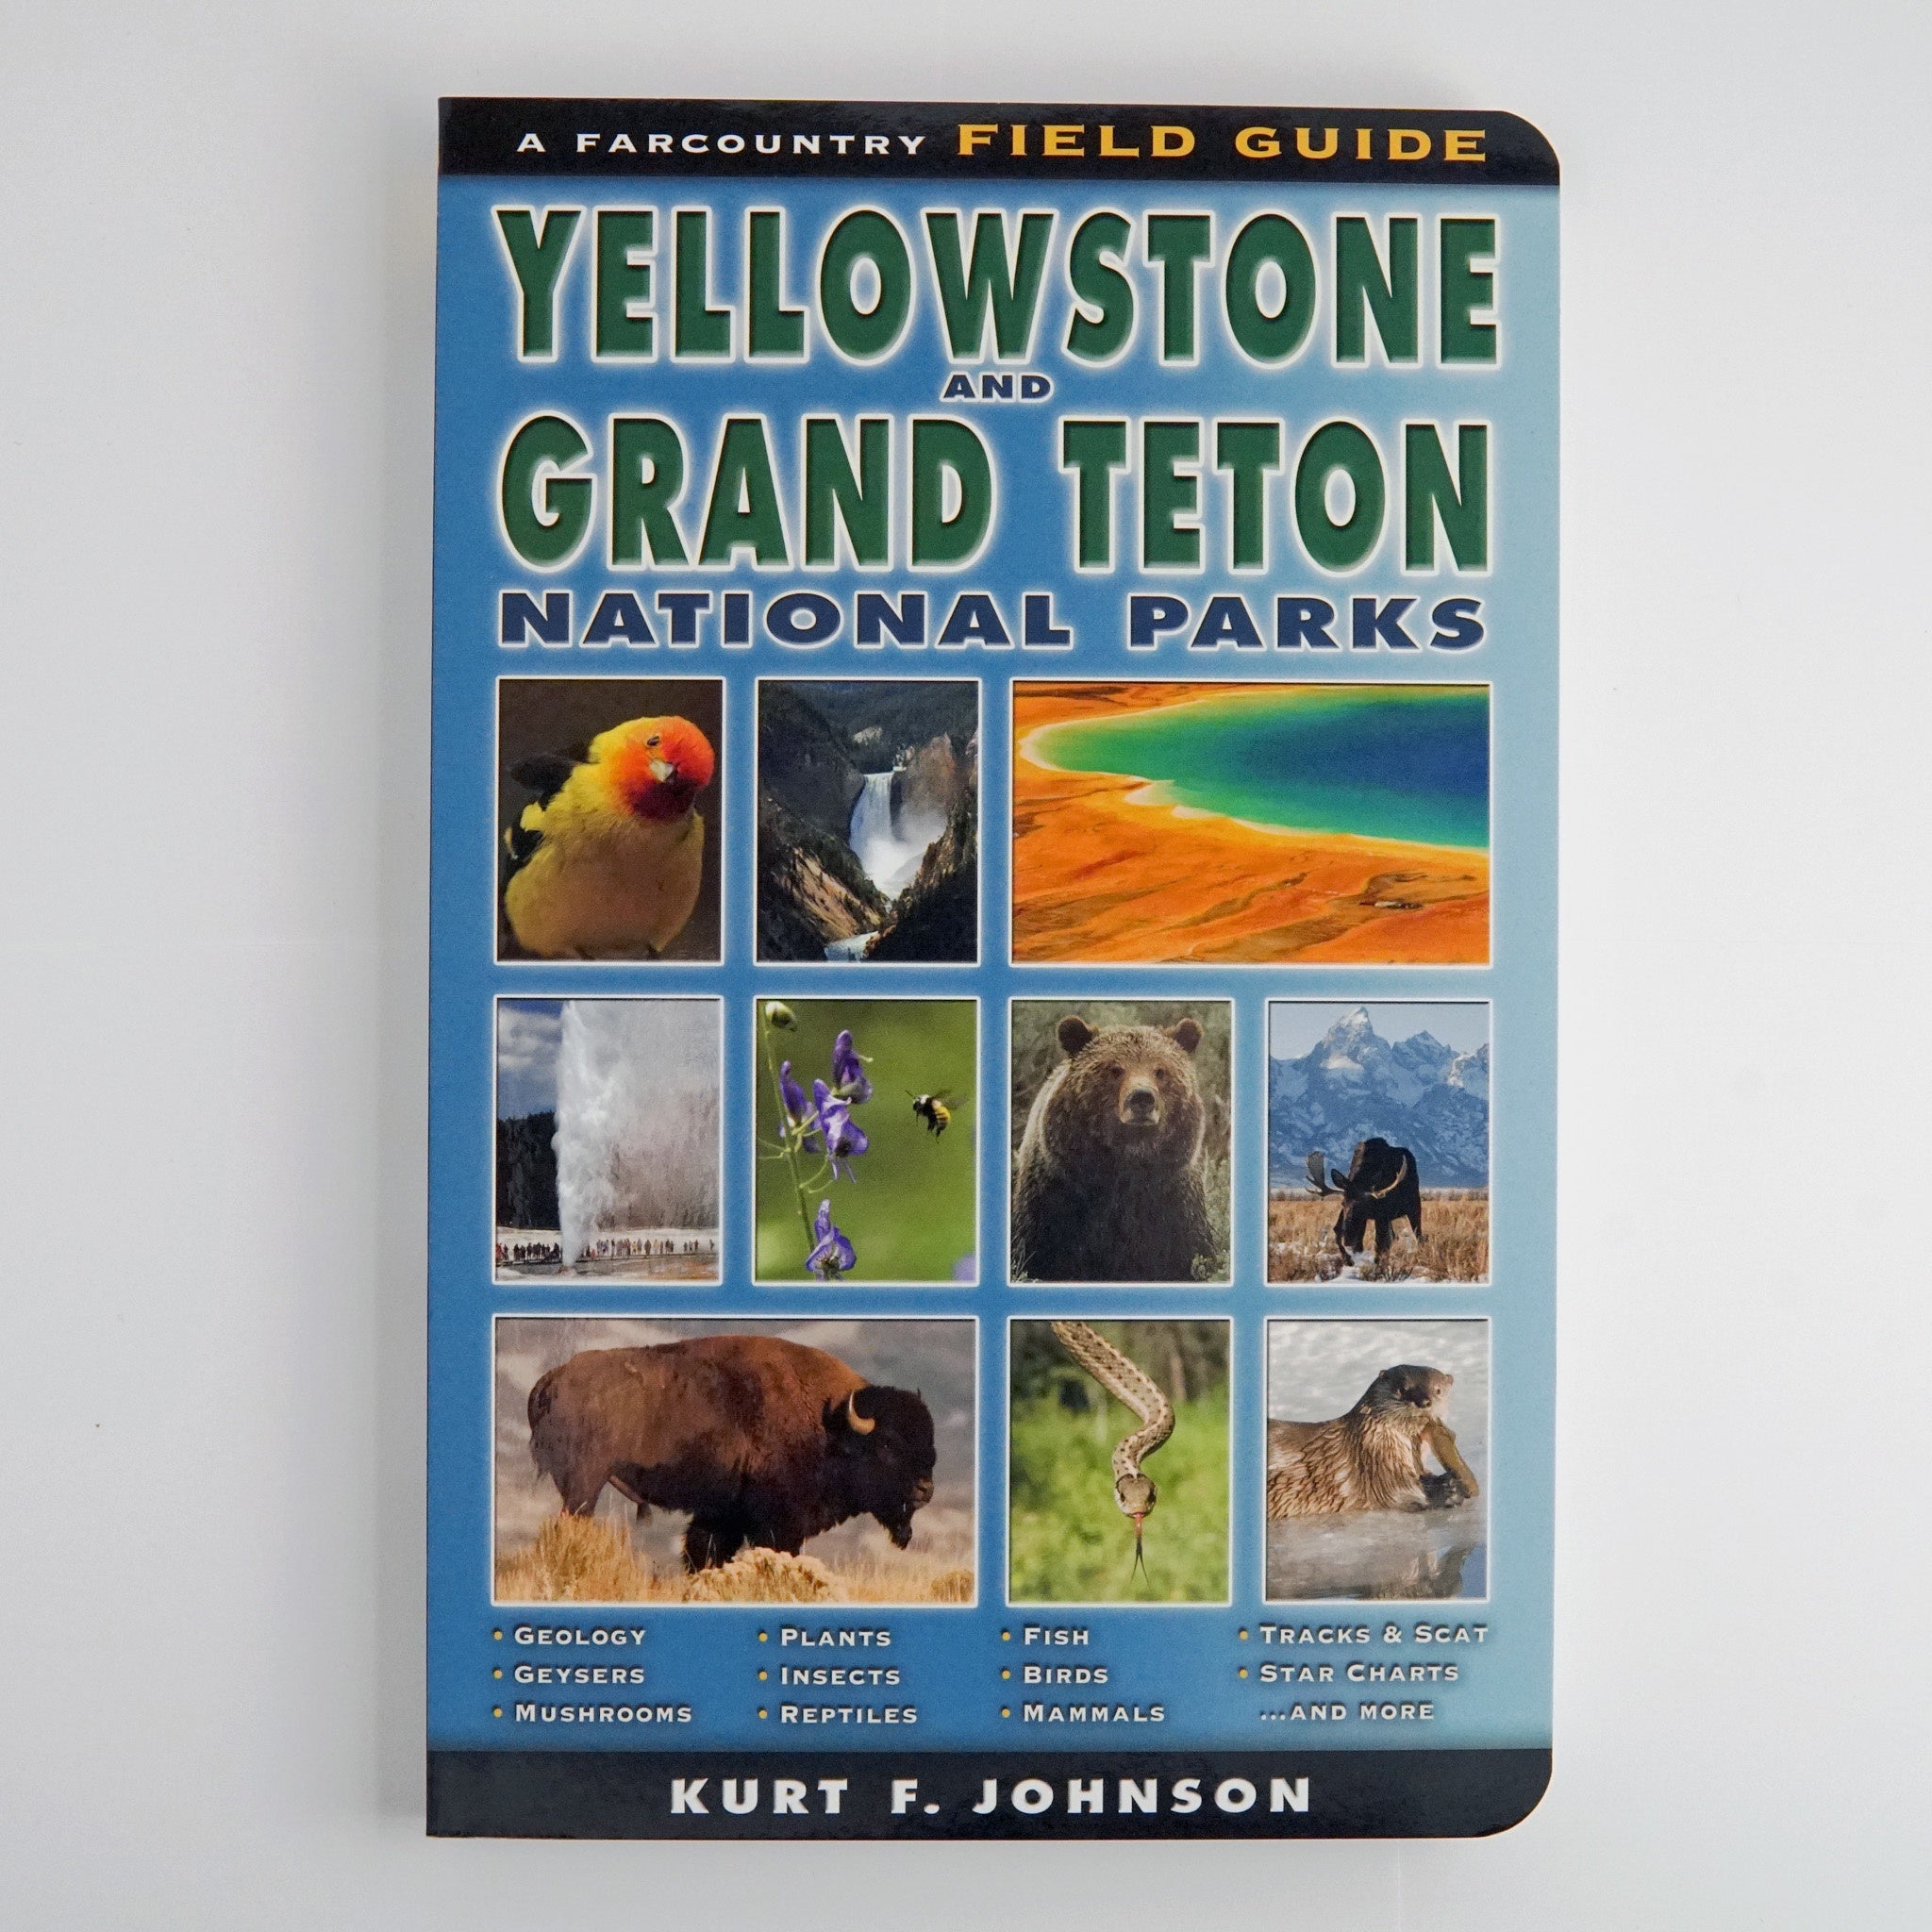 BK 10 FIELD GUIDE YELLOWSTONE & GRAND TETON NATIONAL PARKS BY KURT F. JOHNSON #21036651 D2 AUG23